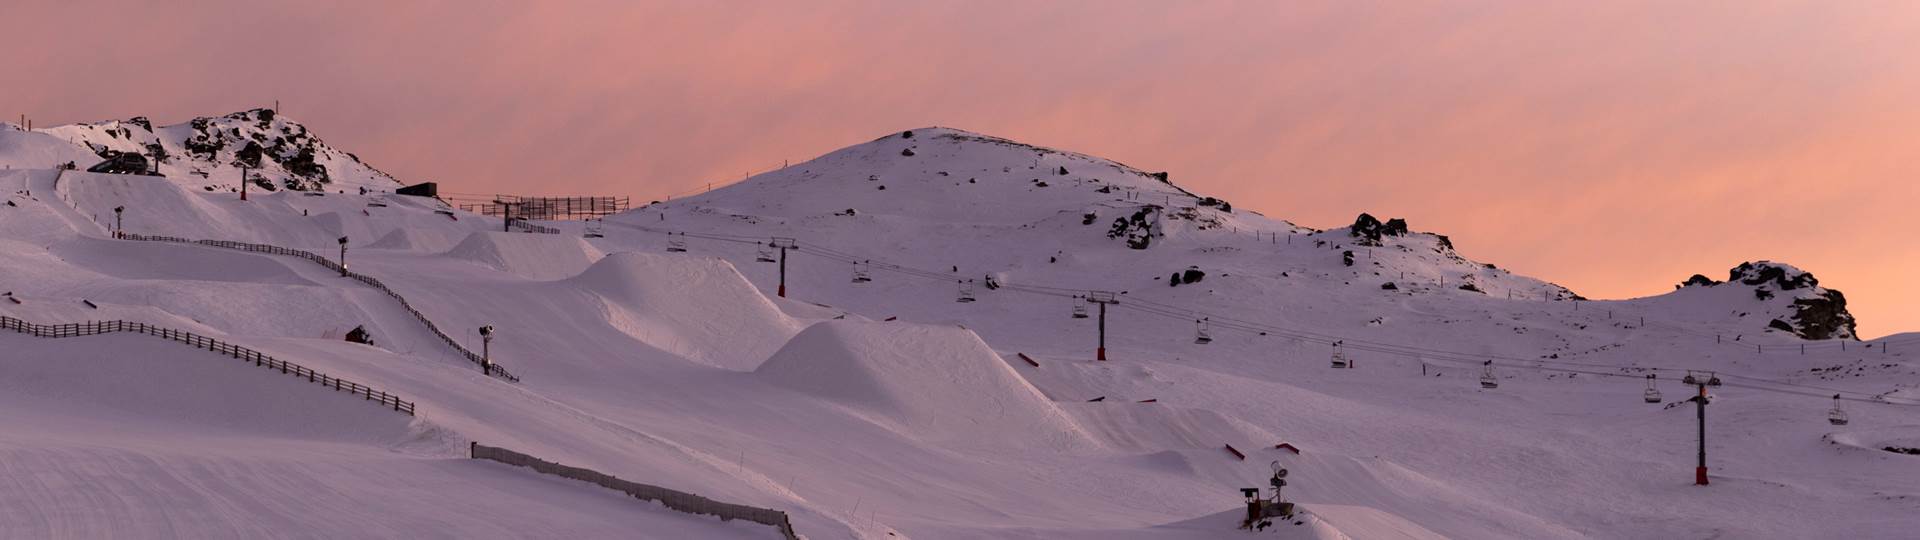 Sunrise at Cardrona Alpine Resort